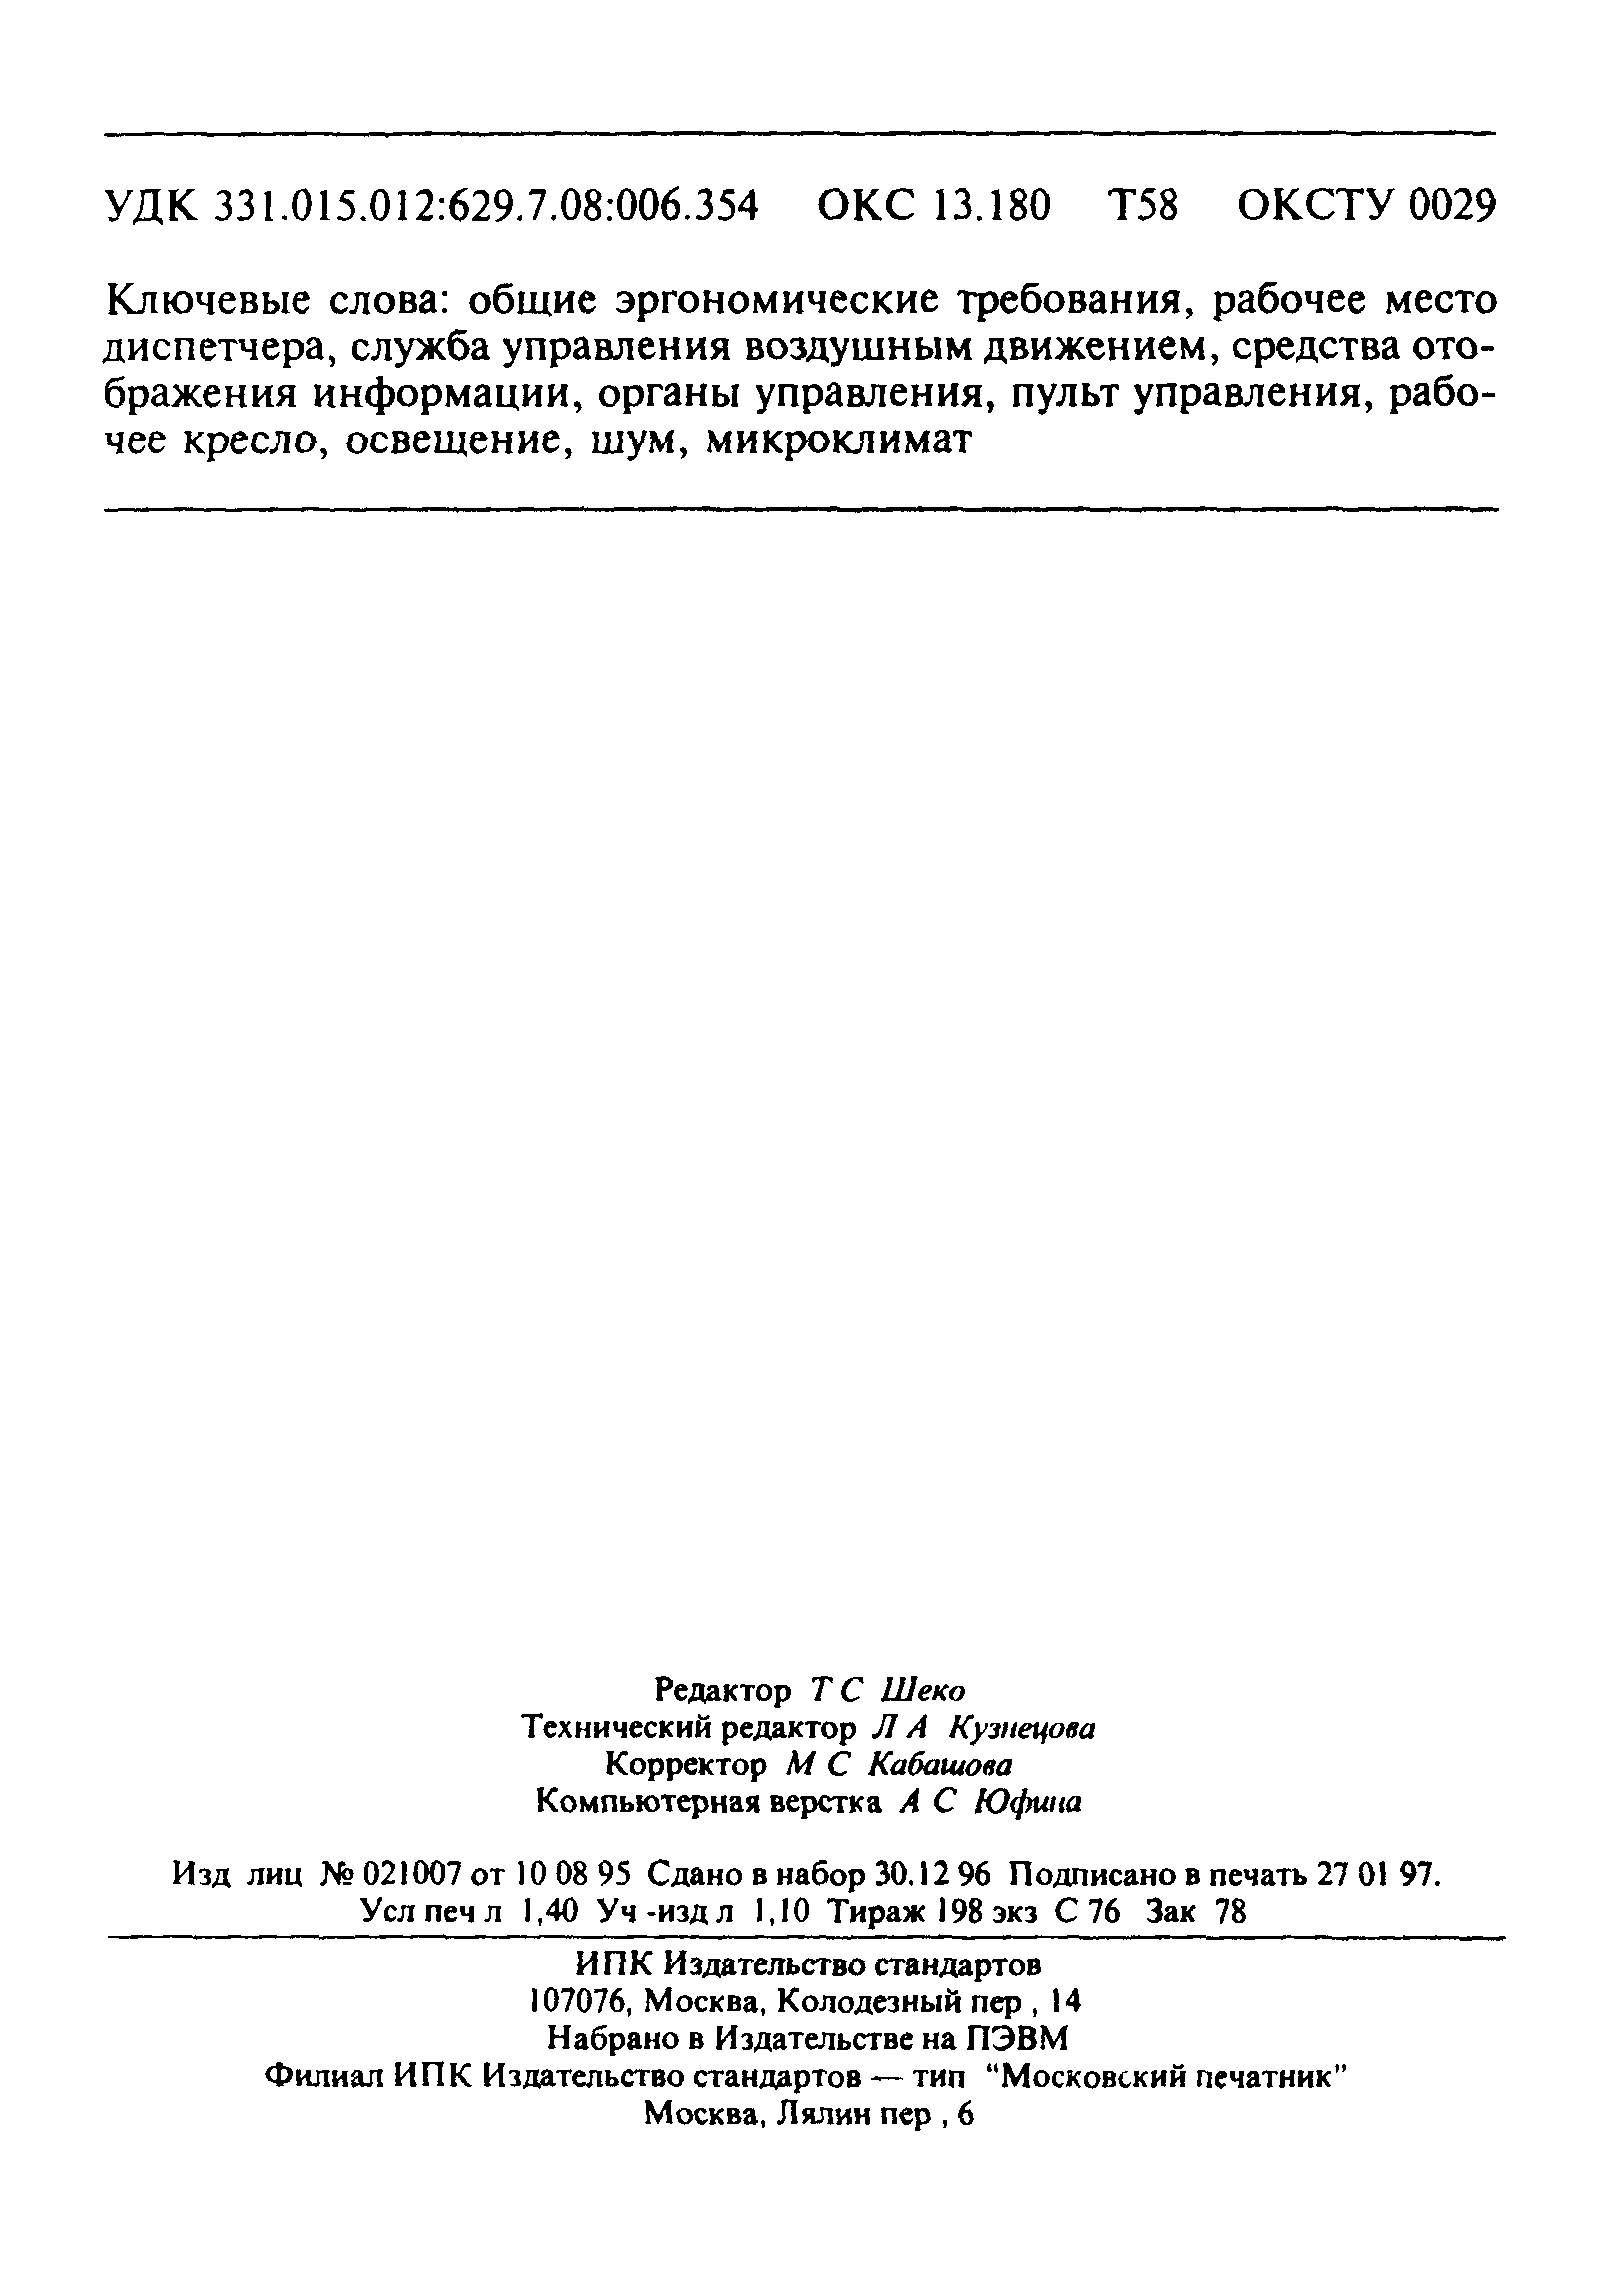 ГОСТ Р 29.08.004-96